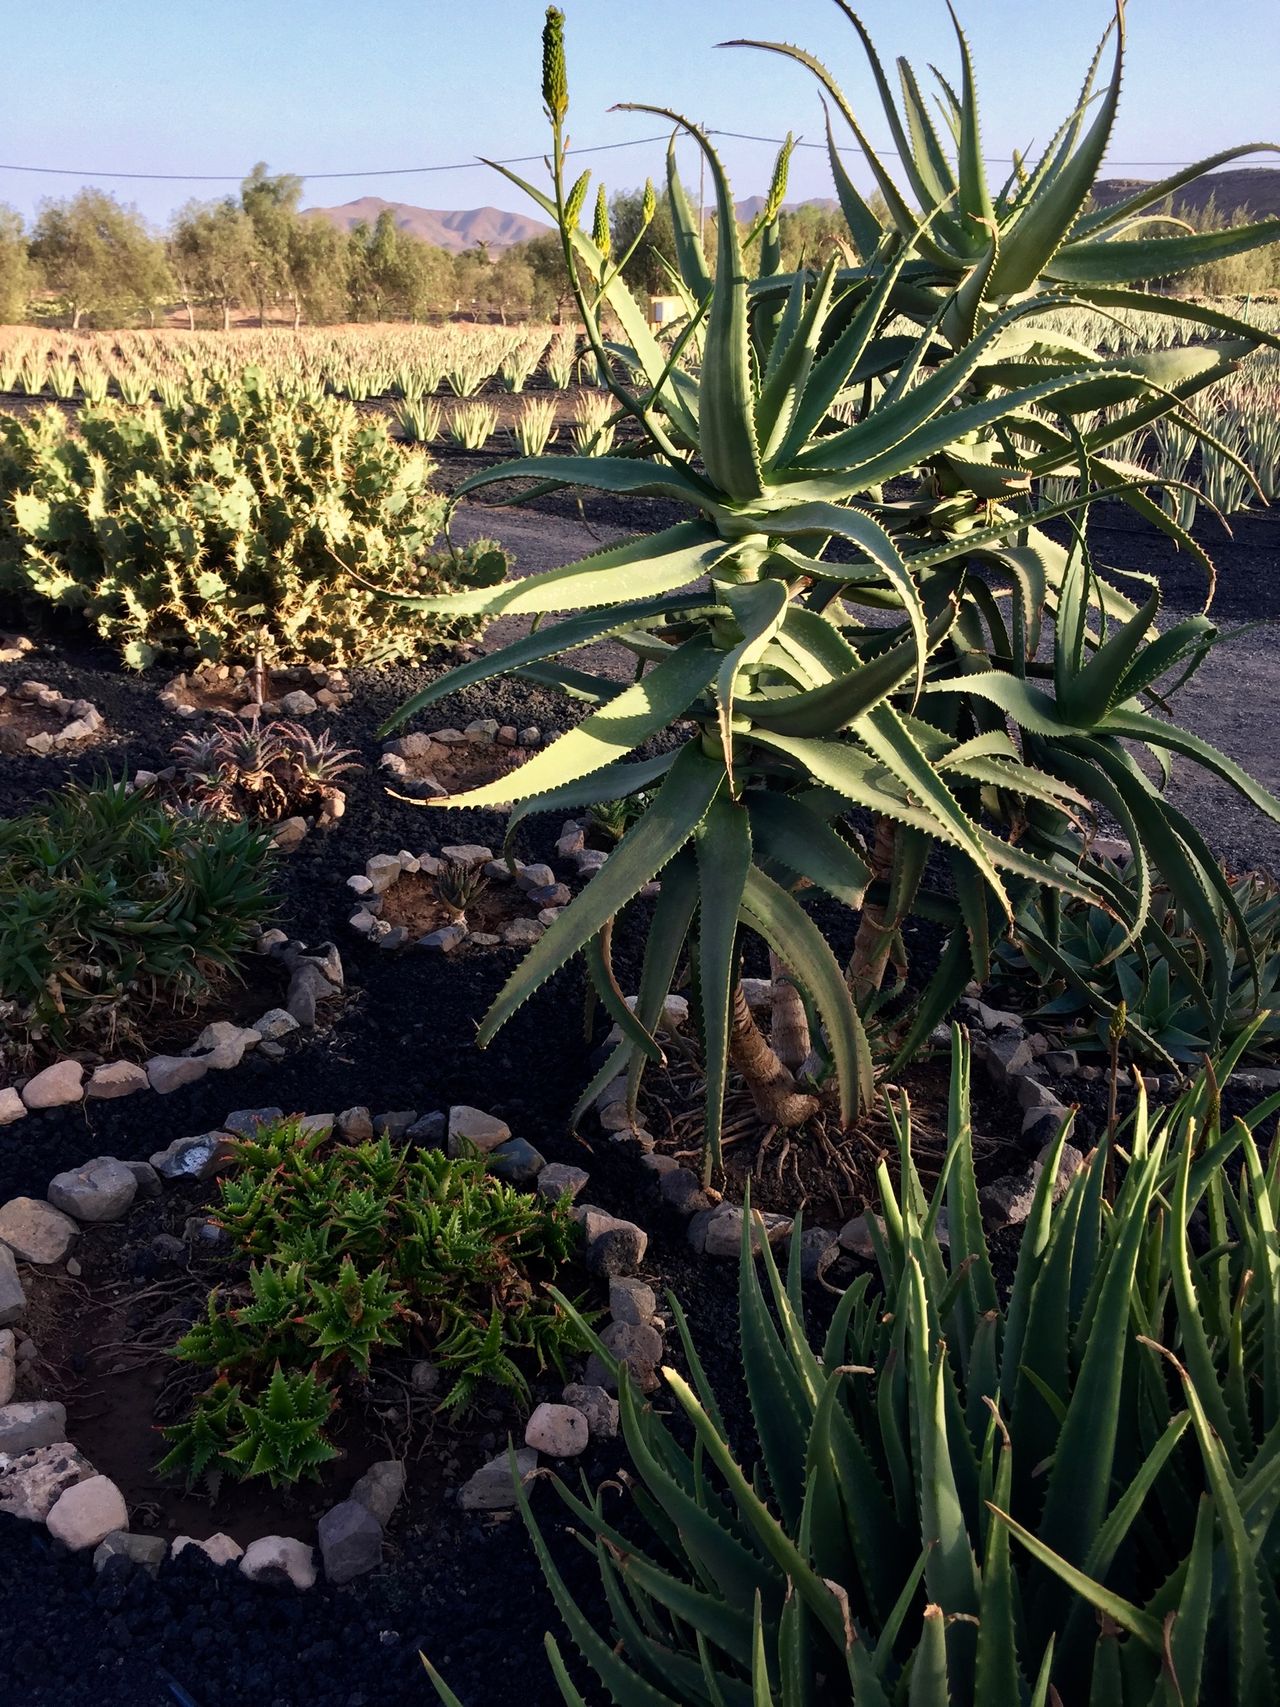 Decorative aloe plants. Aloe vera plantation in background.